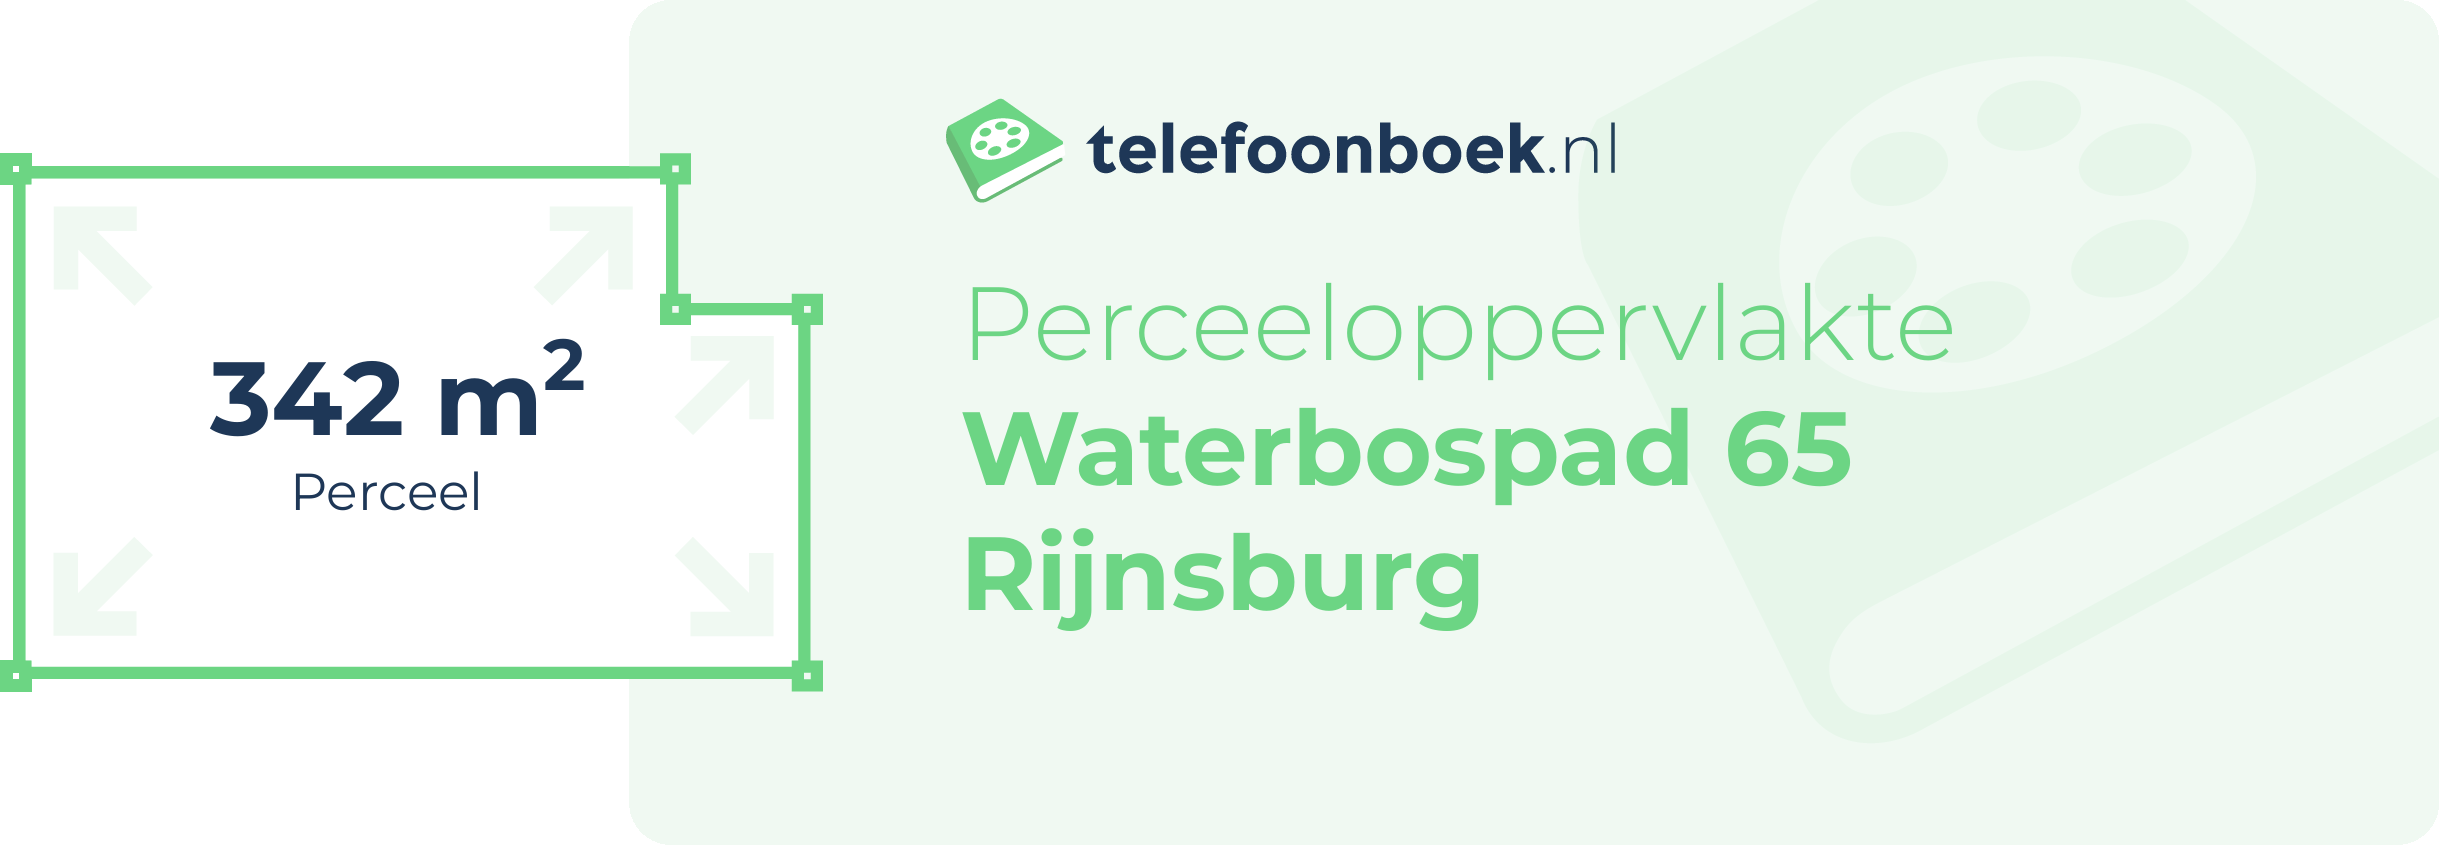 Perceeloppervlakte Waterbospad 65 Rijnsburg